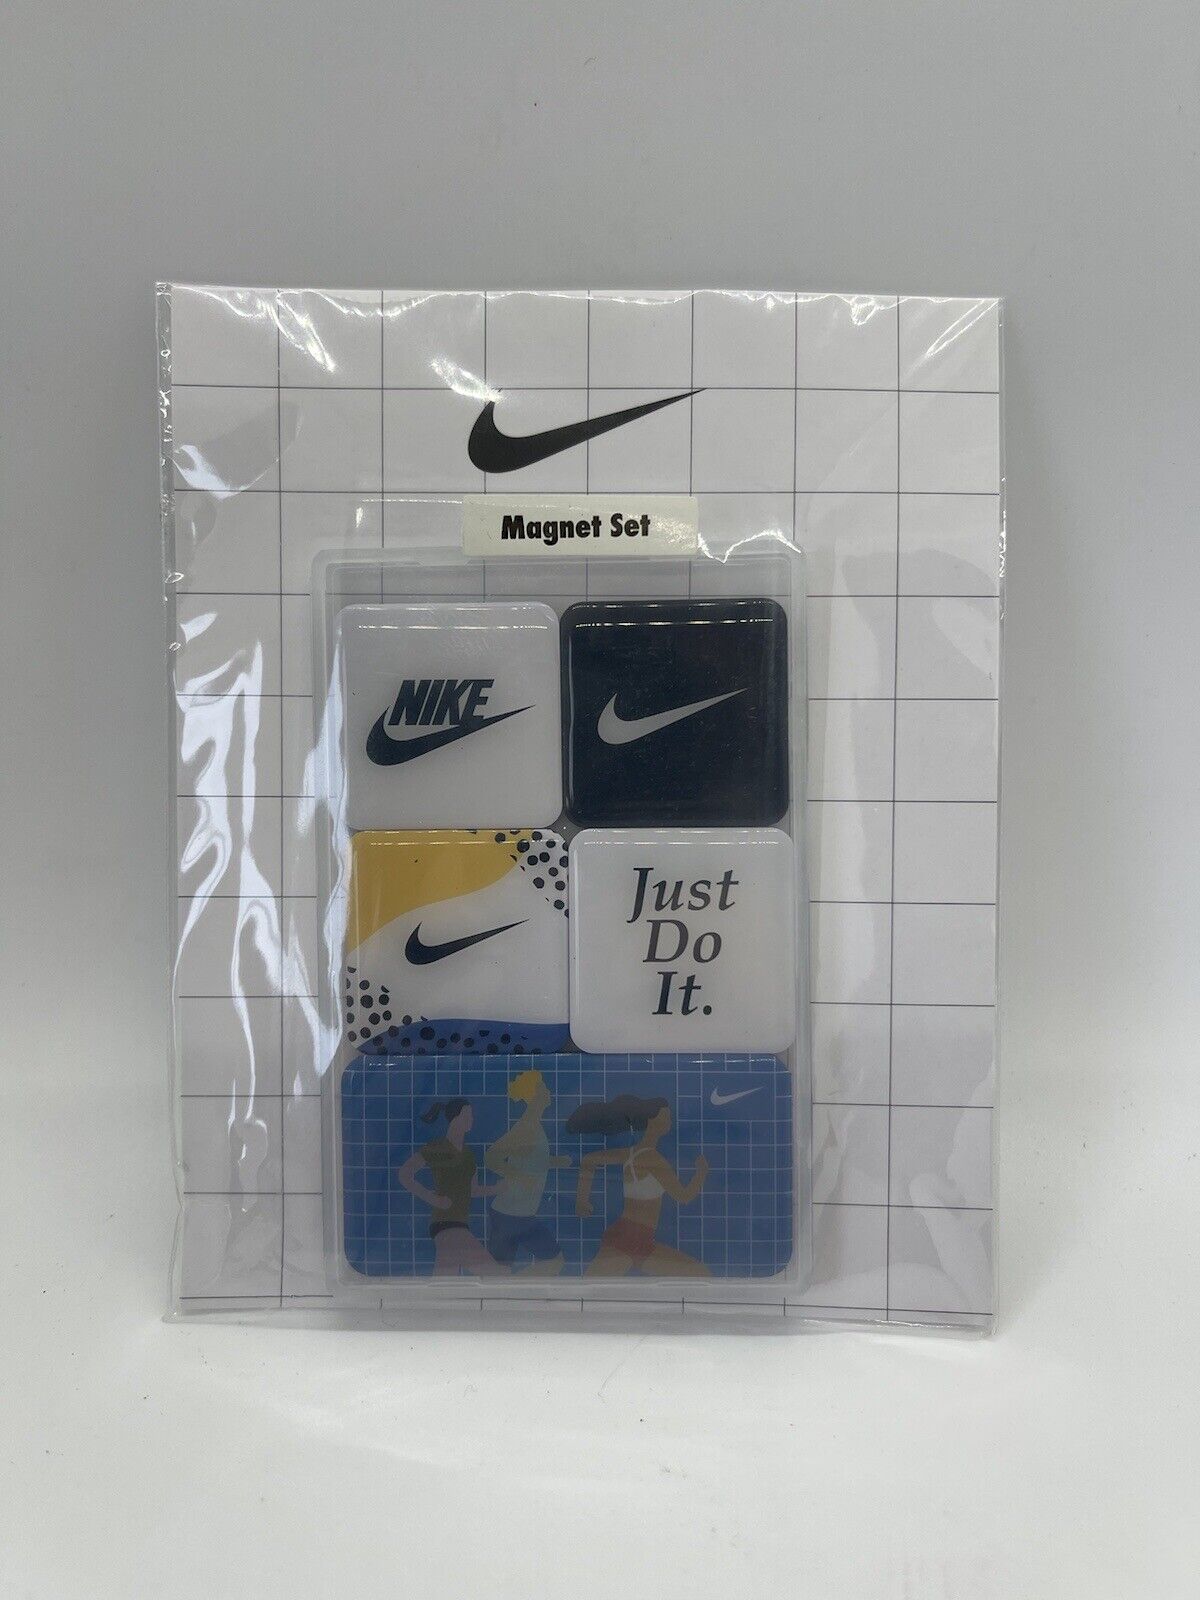 Nike Store Promo Magnet Set Of 5 RARE Promotional Item Swoosh Just Do It